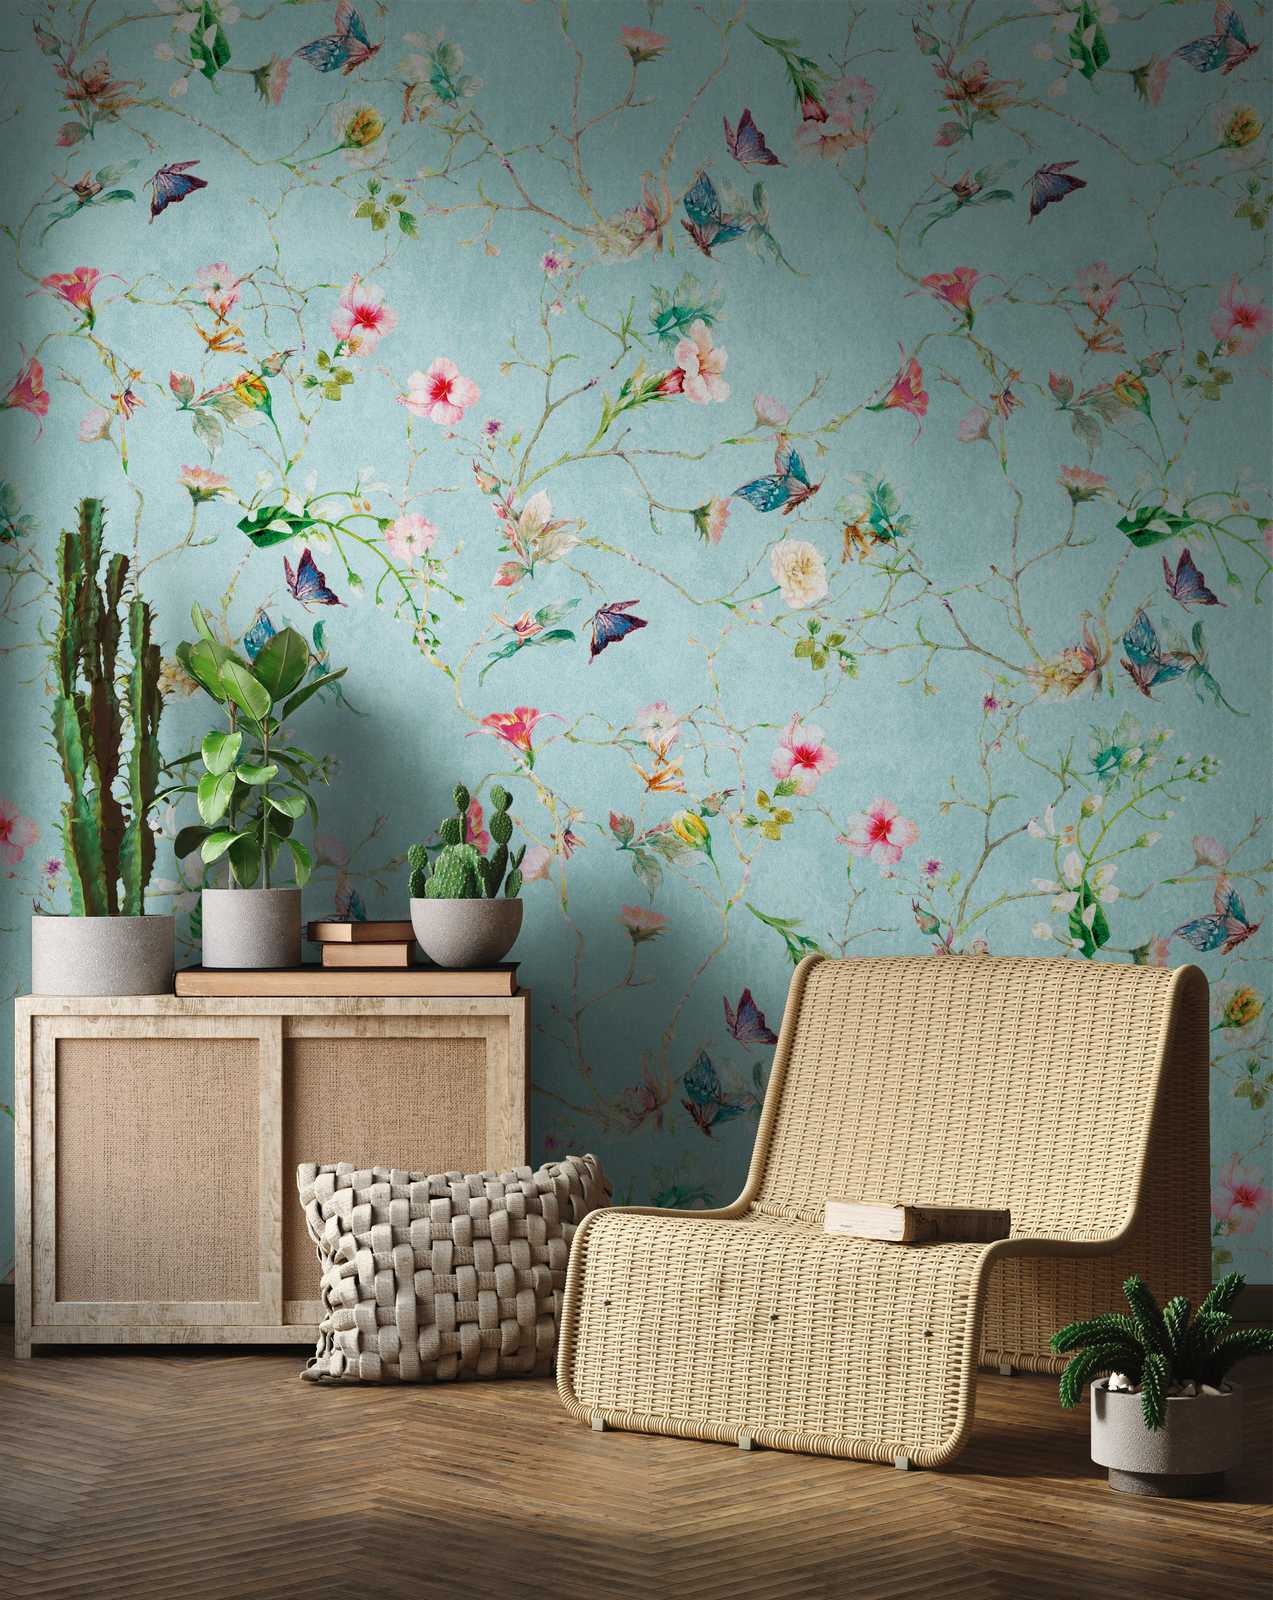             Papeles pintados novedad - papel pintado motivo mariposa y flores, motivo panel turquesa
        